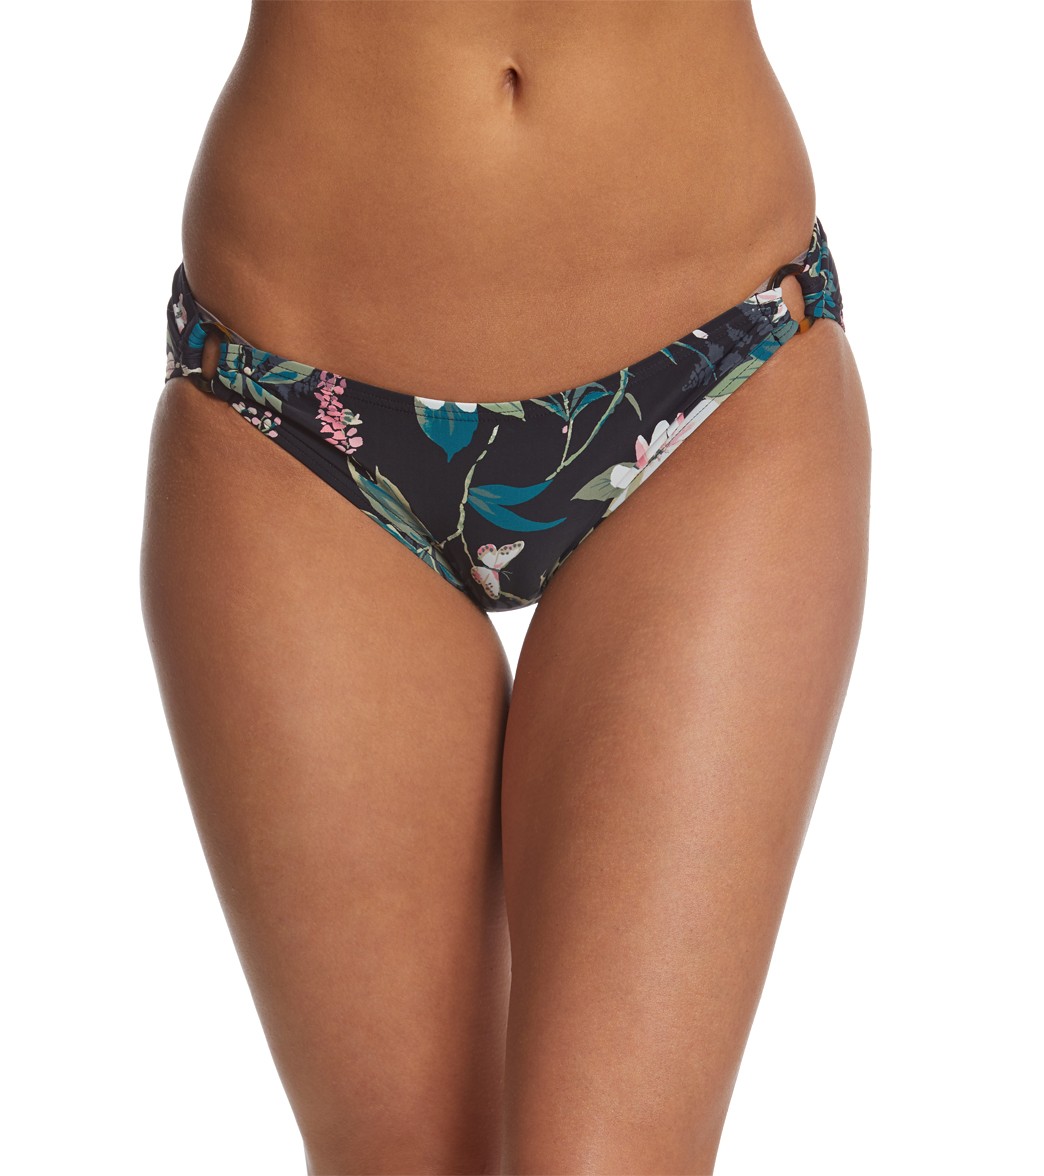 Kate Spade New York Playa Carmen Classic Bikini Bottom - Black Small - Swimoutlet.com